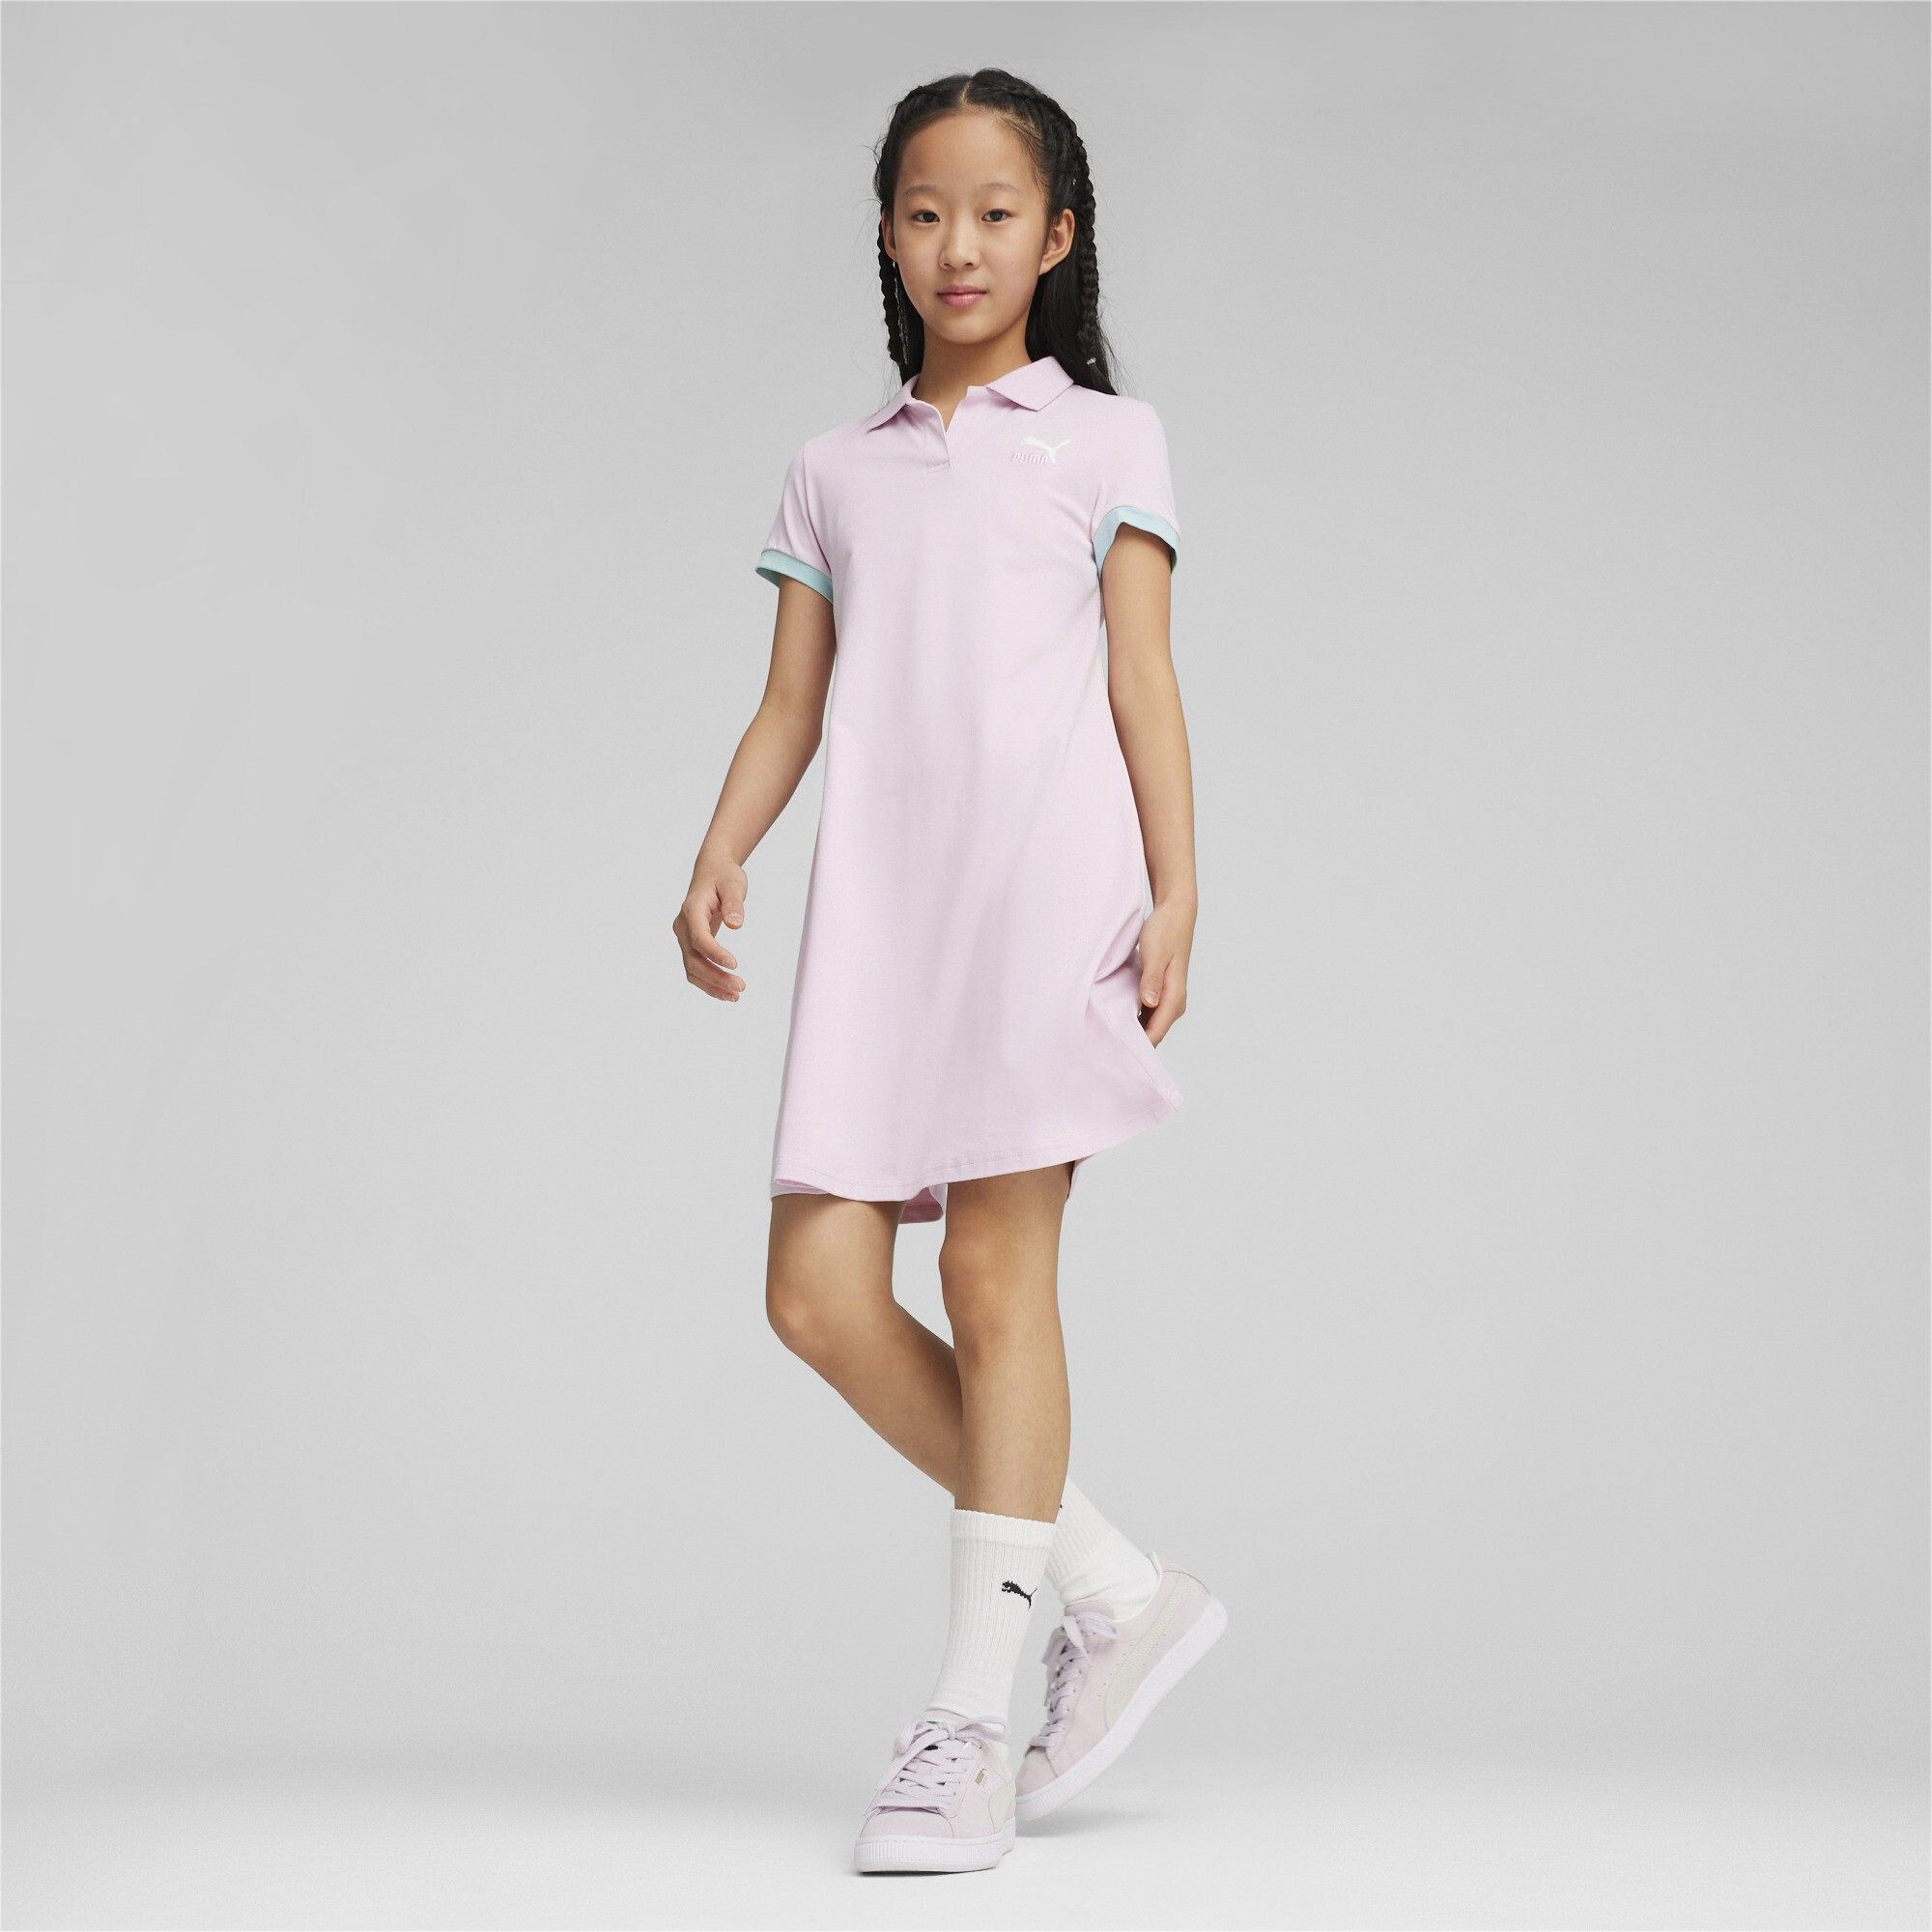 PUMA CLASSICS Match Point Dress In 90 - Purple, Size 15-16 Youth